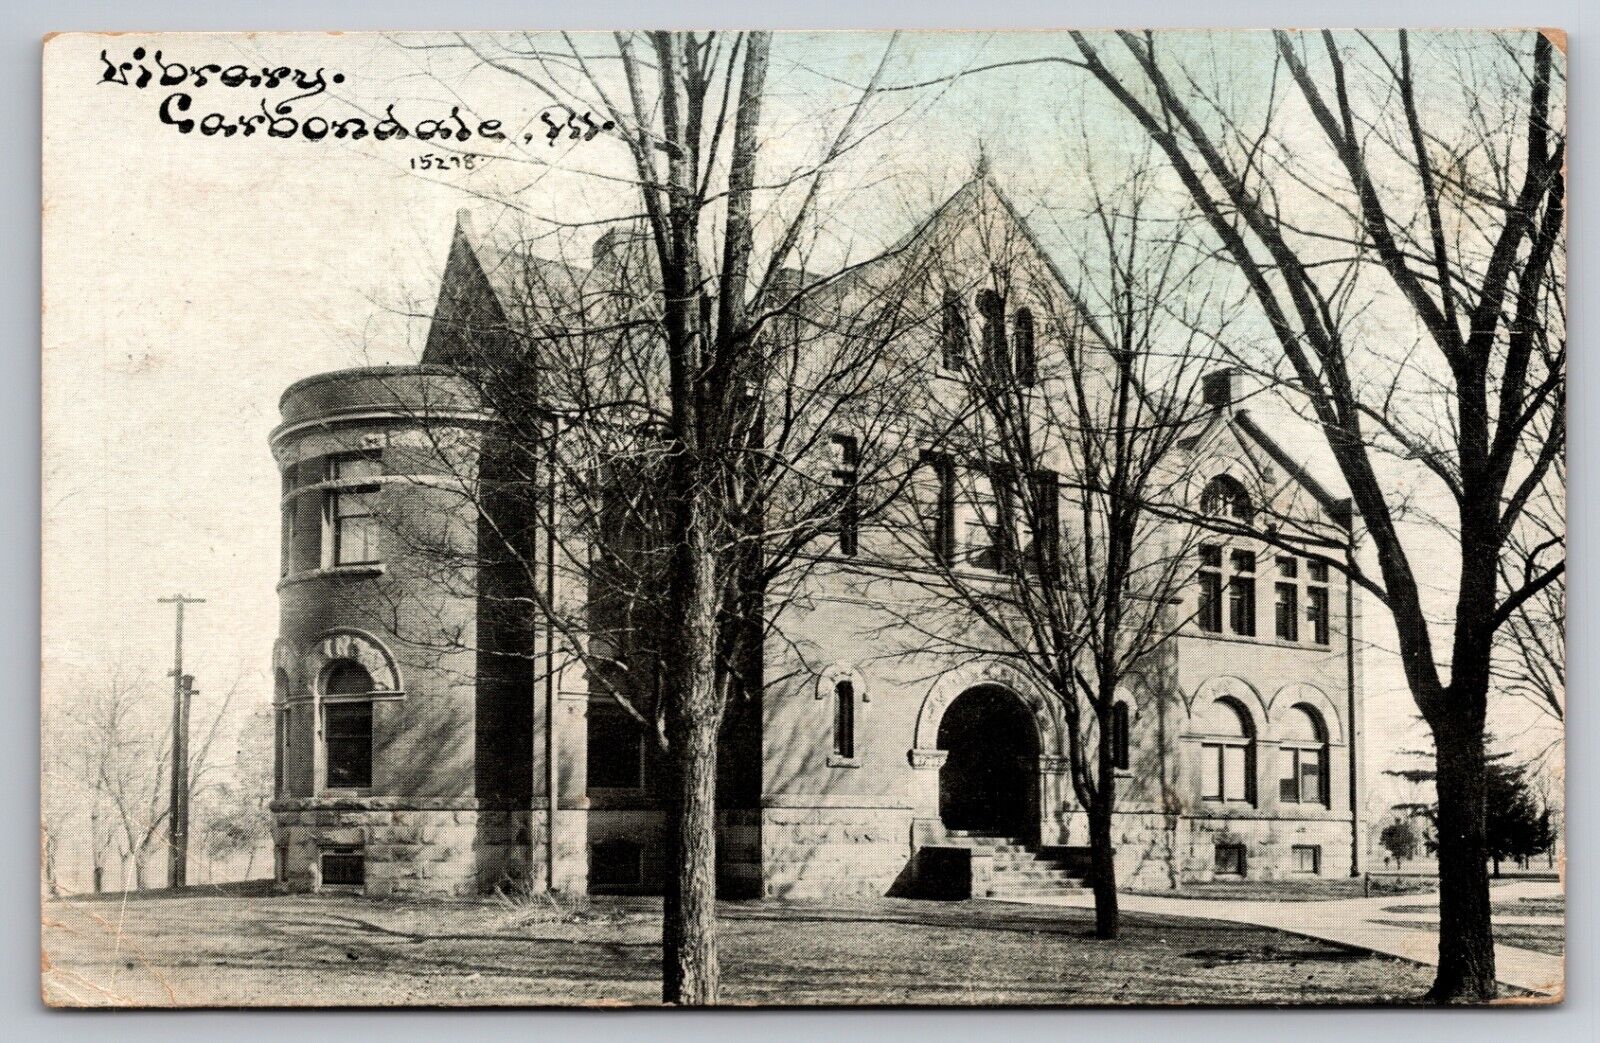 Library Normal University Carbondale Illinois IL 1913 Postcard